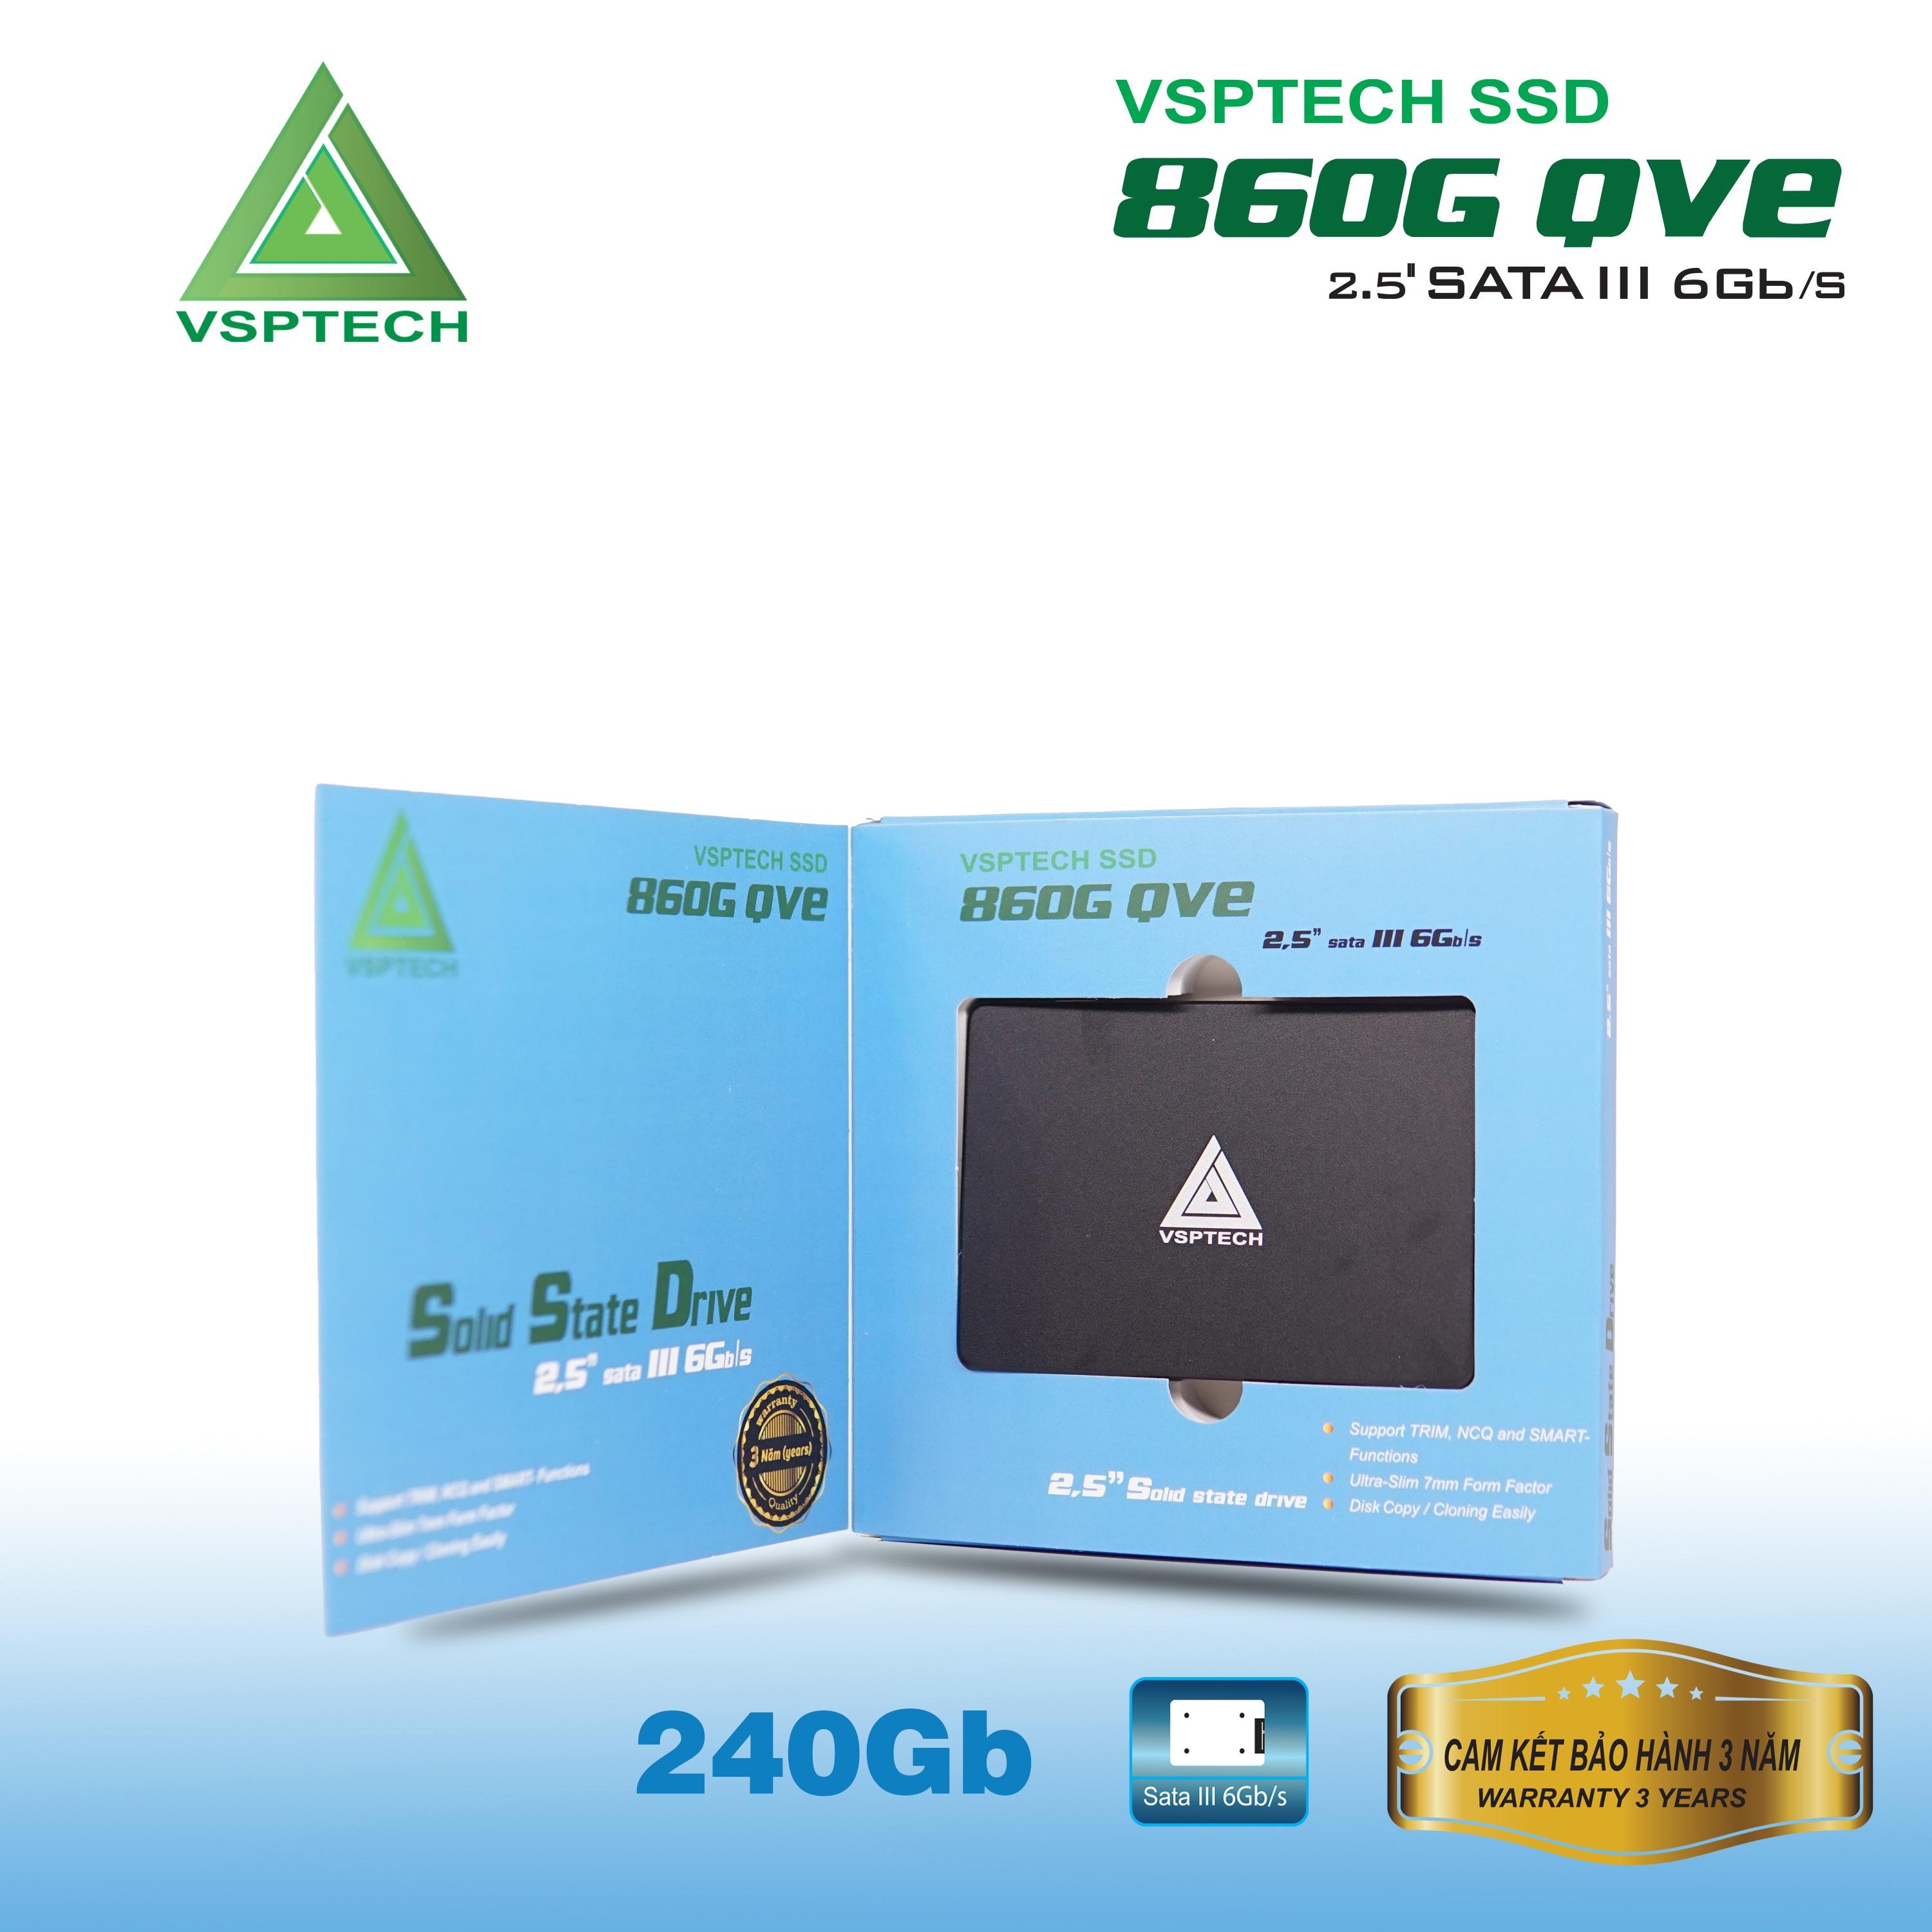 SSD 240G VSPTECH 860G QVE